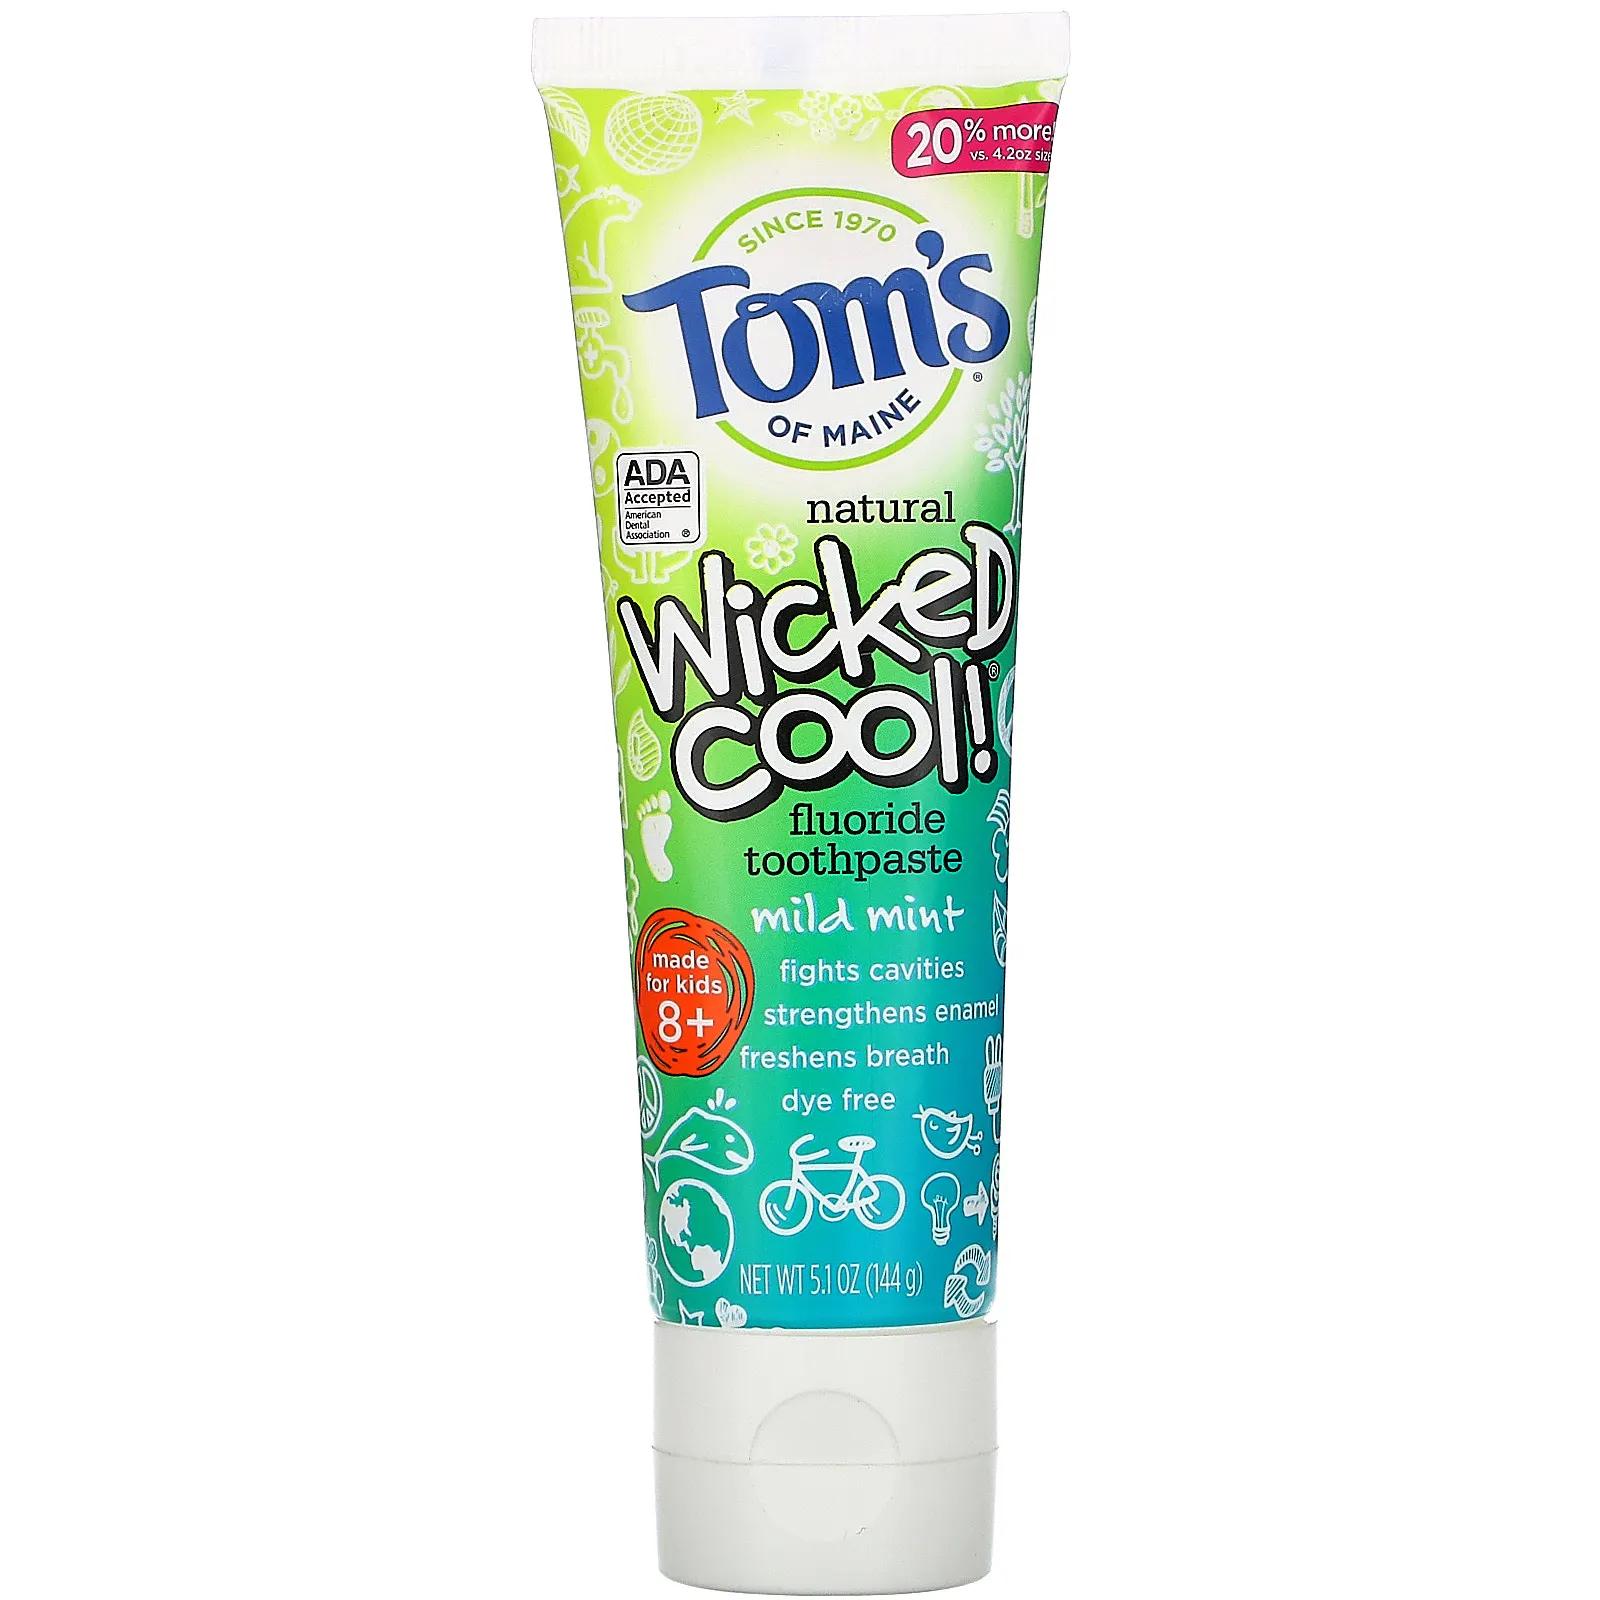 Tom's of Maine Wicked Cool! Natural Fluoride Toothpaste Kids 8+ Wild Mint 5.1 oz (144 g) дезодорант tom s of maine без запаха